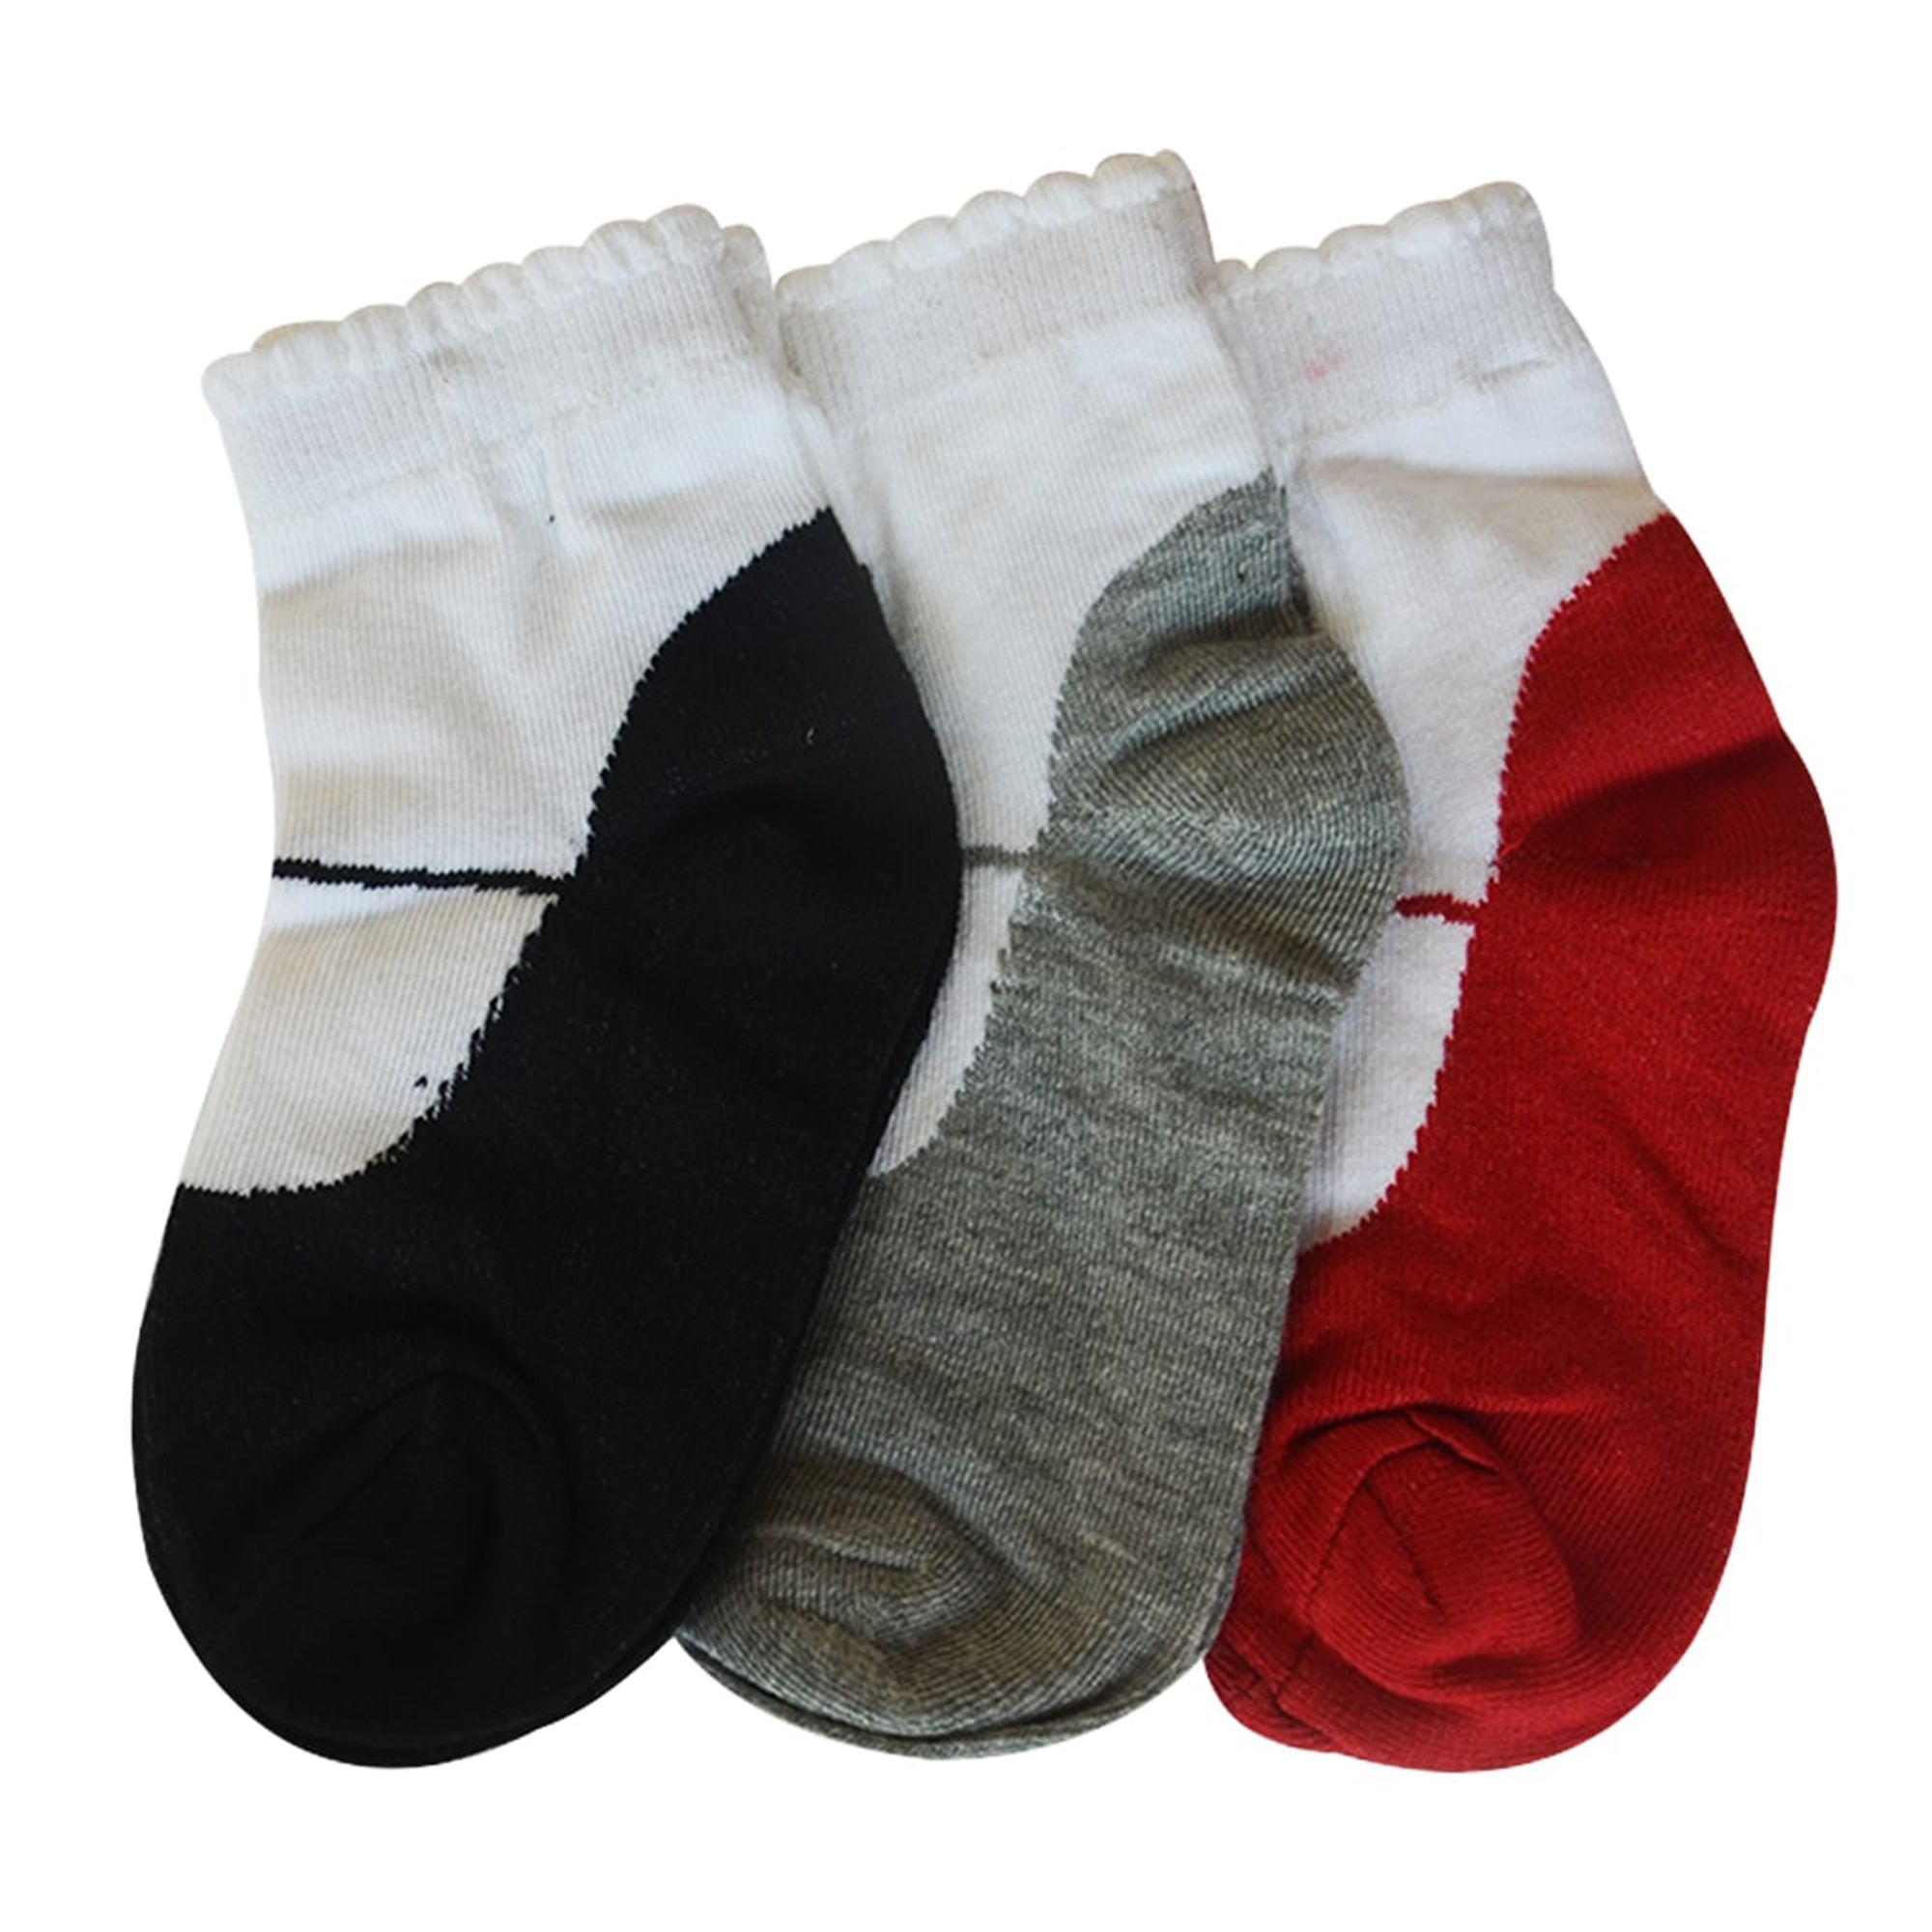 Footprints Baby Girls Socks- Pack of 3 Pairs -12-24 Months- 2 Color Trio